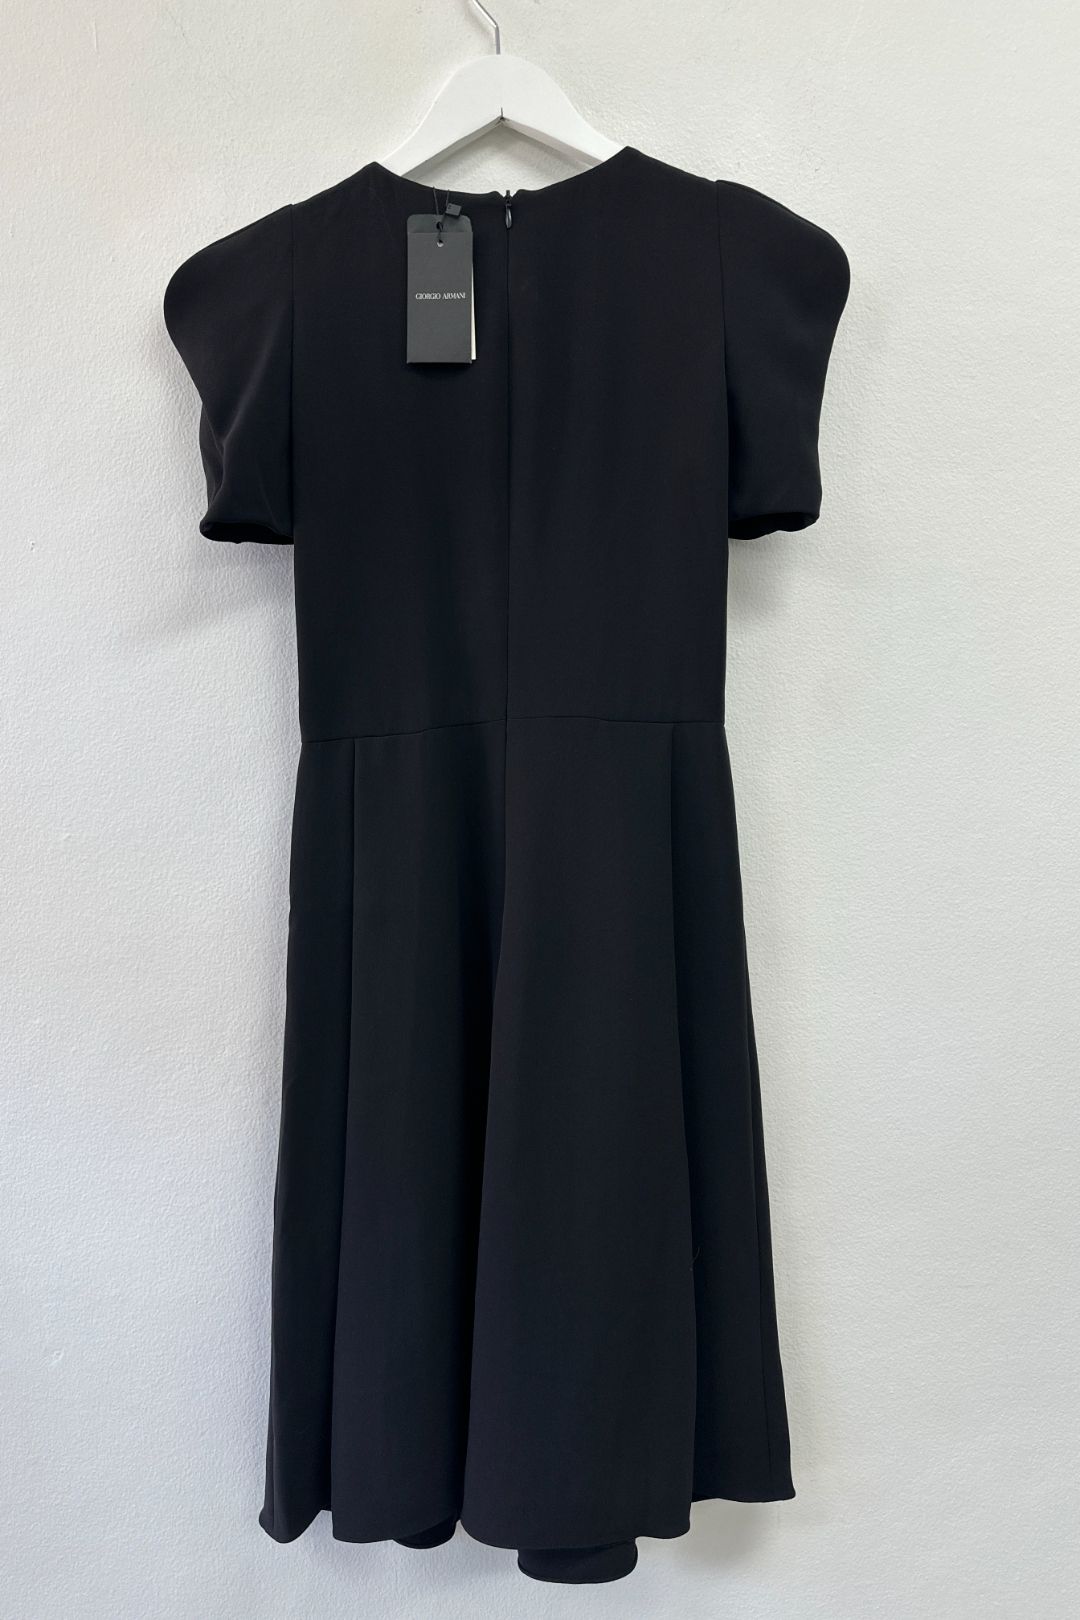 Giorgio Armani Black Silk Knee Length Dress